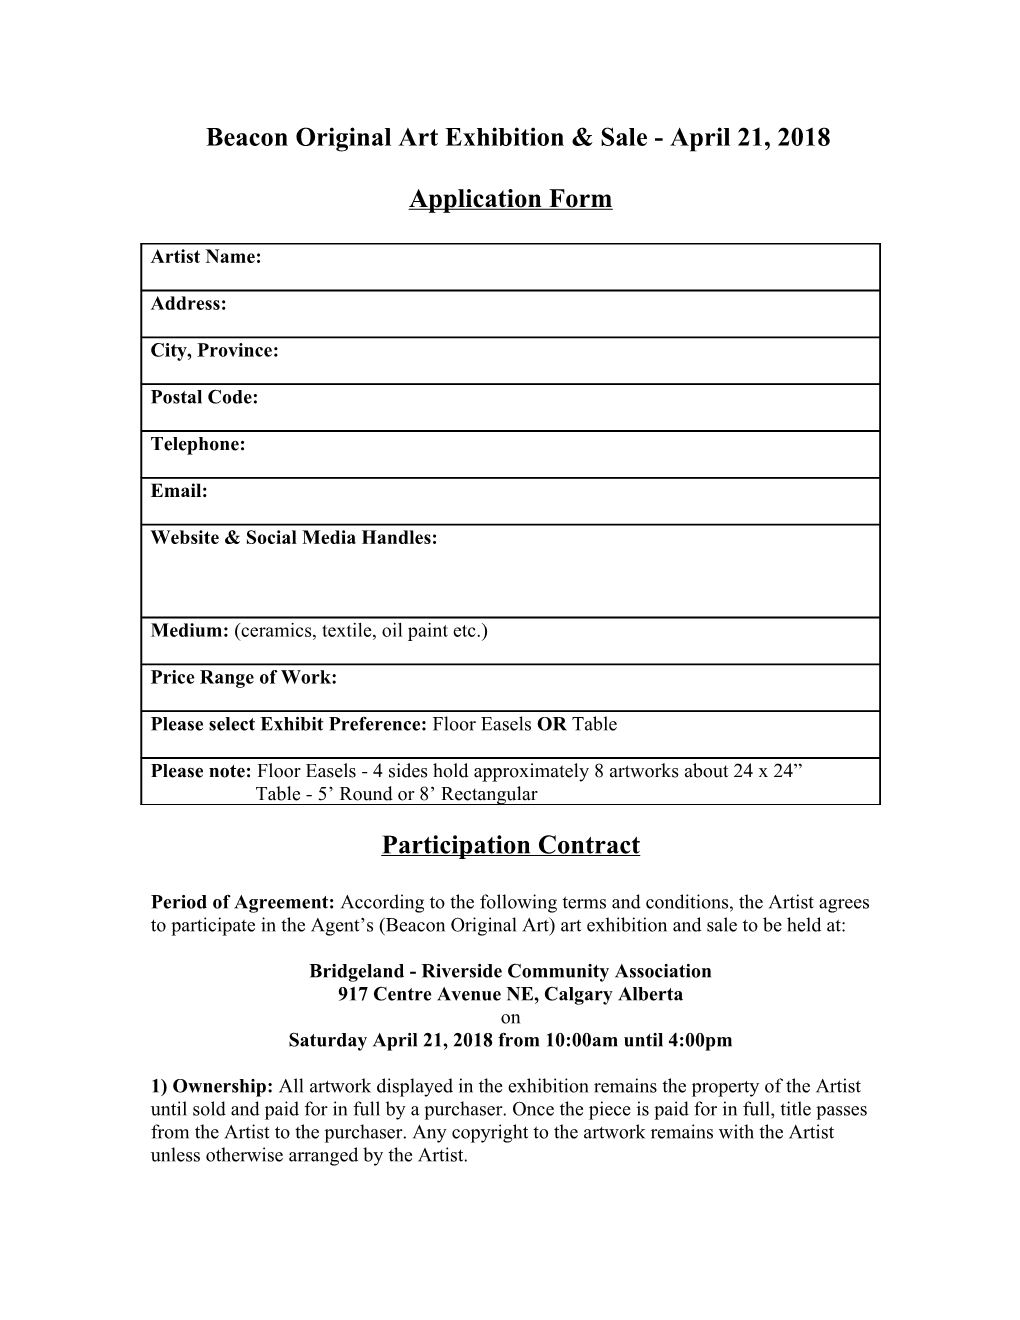 Beacon Original Art Application Form Sale #1 May 2, 2009